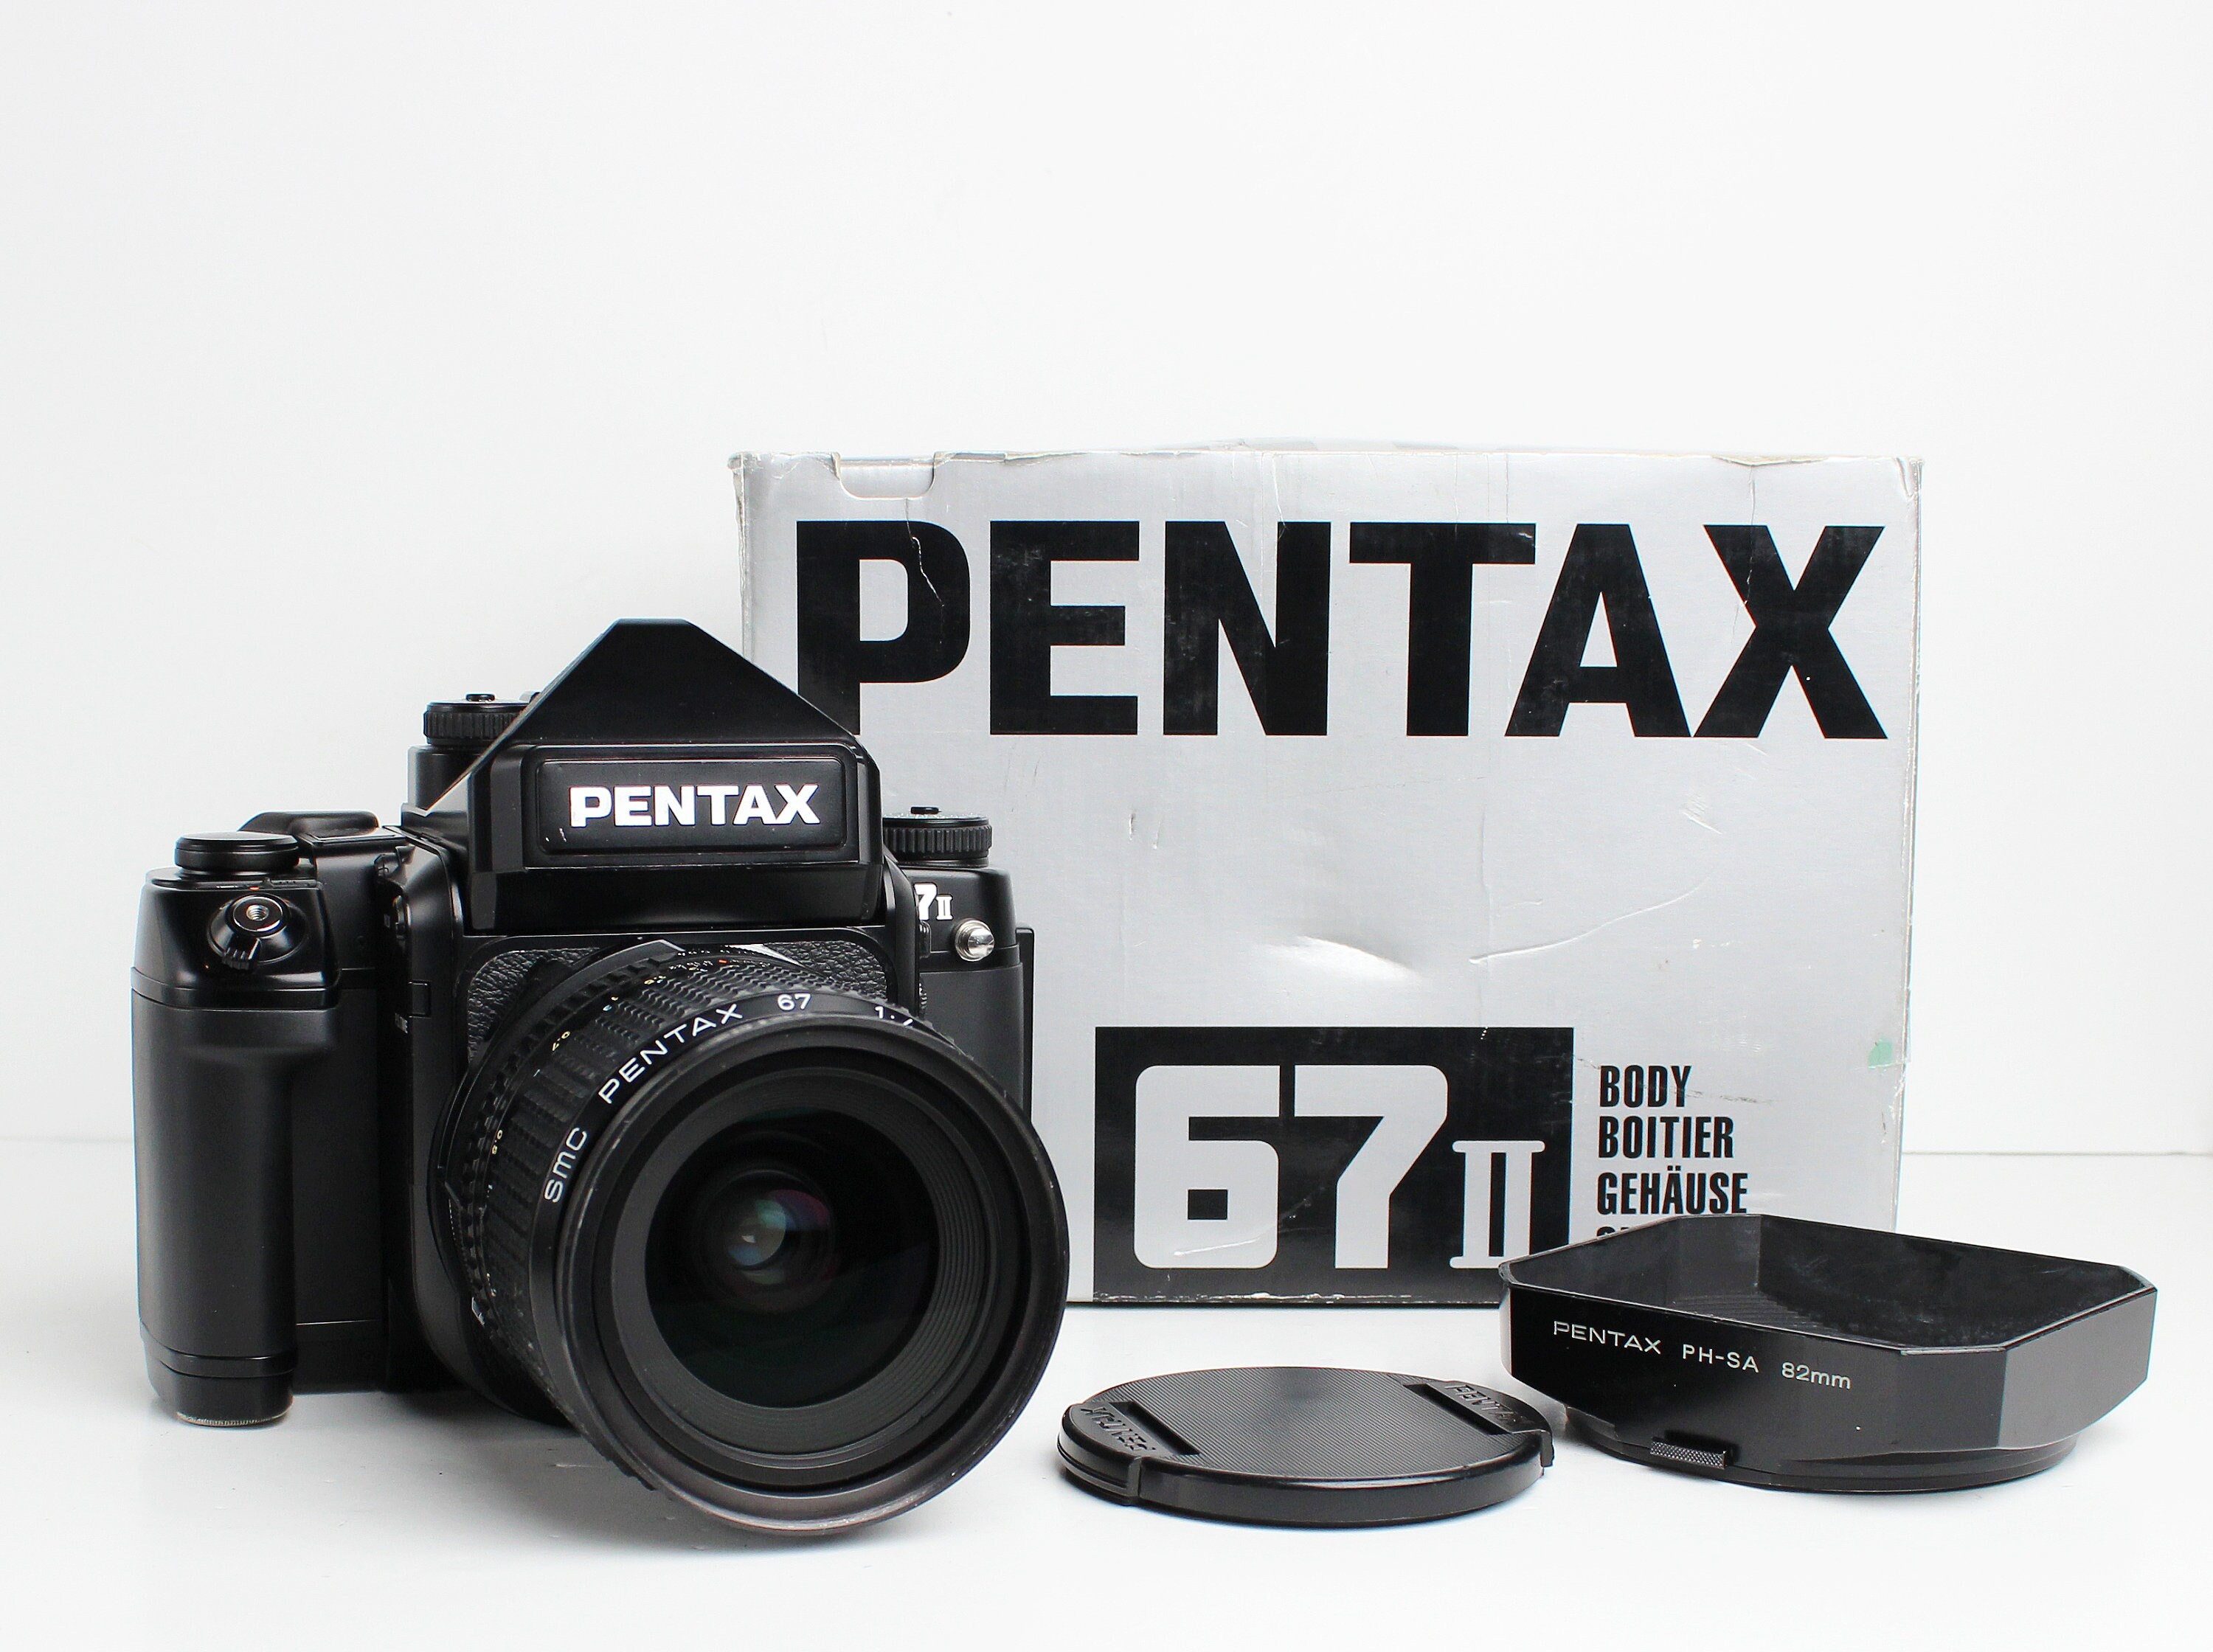 PENTAX 67II Medium Format Film Camera With AE SMC Pentax 67 55mm F